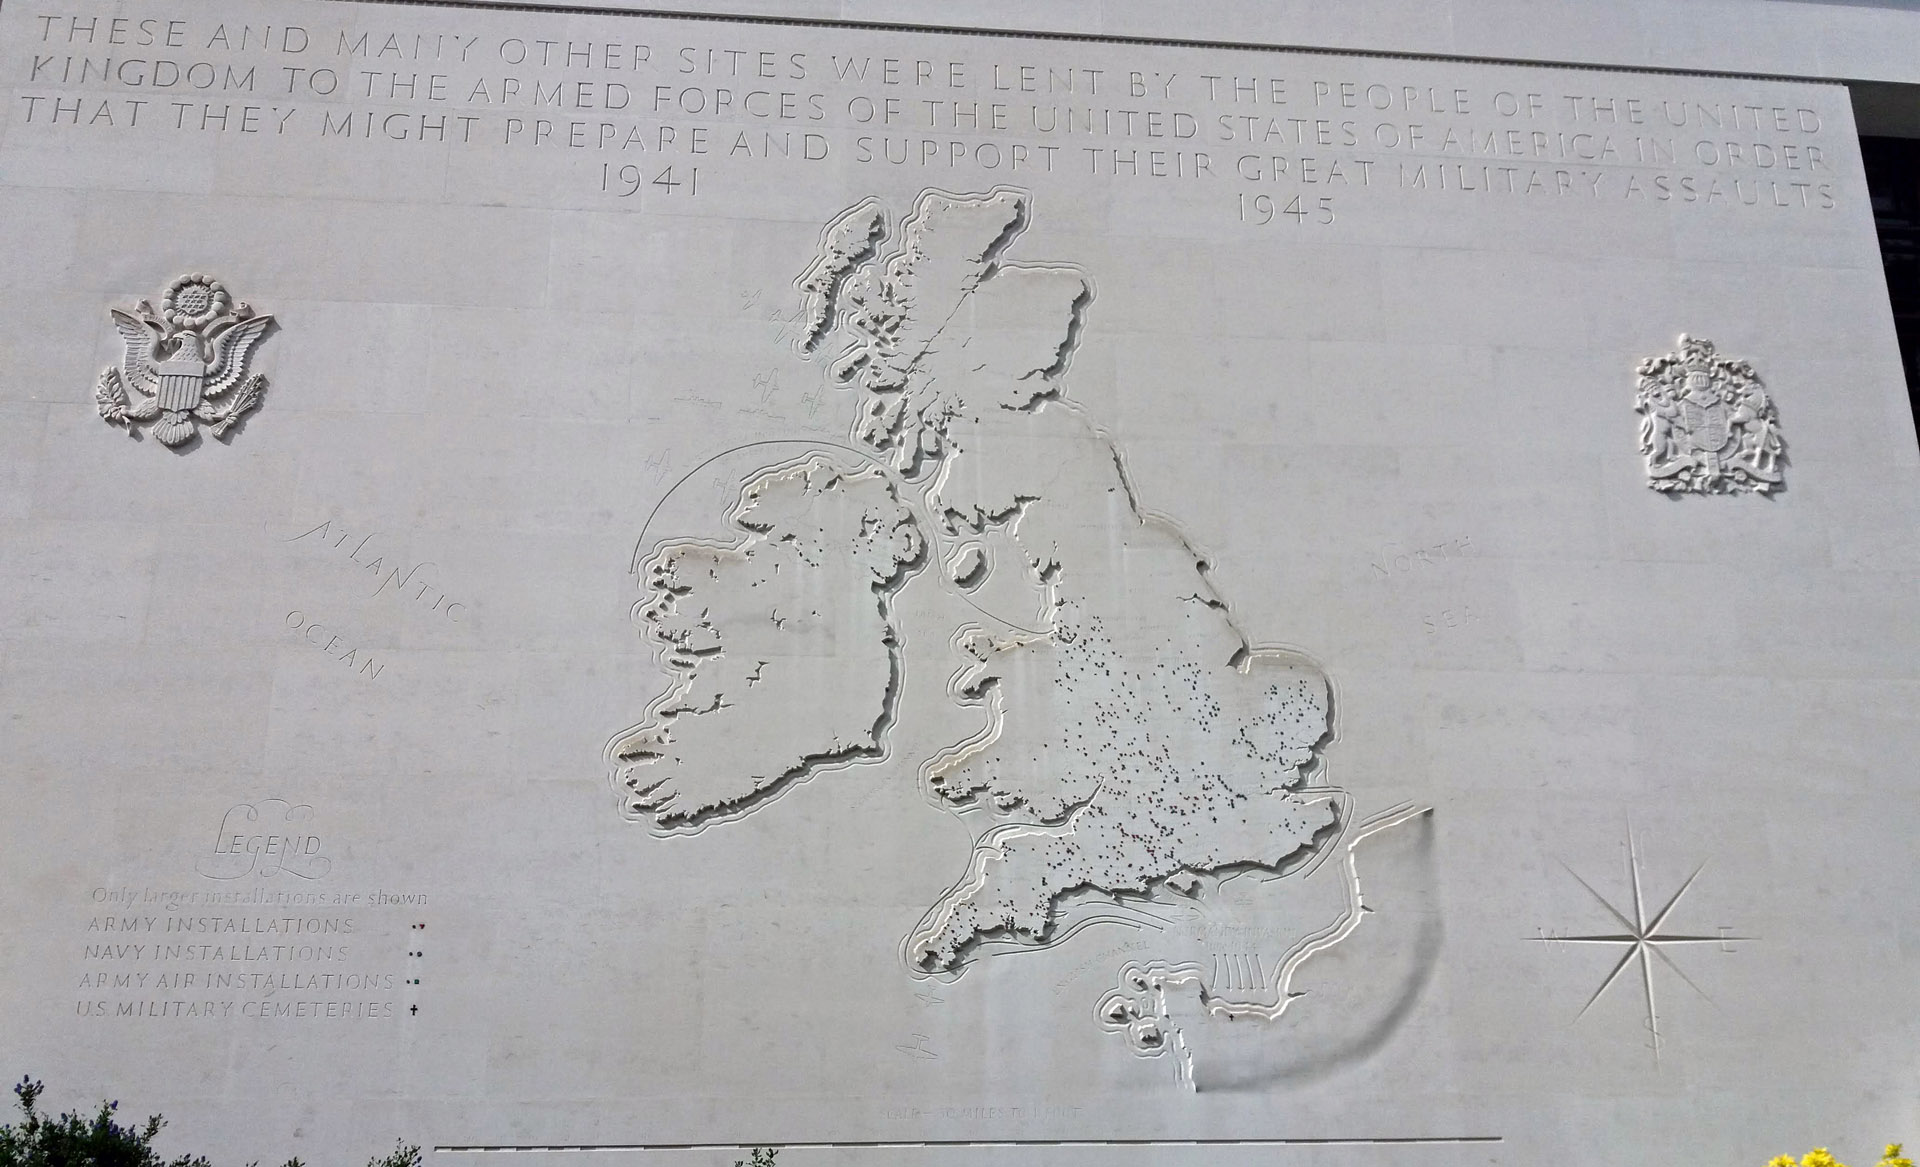 cambridge american cemetary memorial map US military installations UK chapel